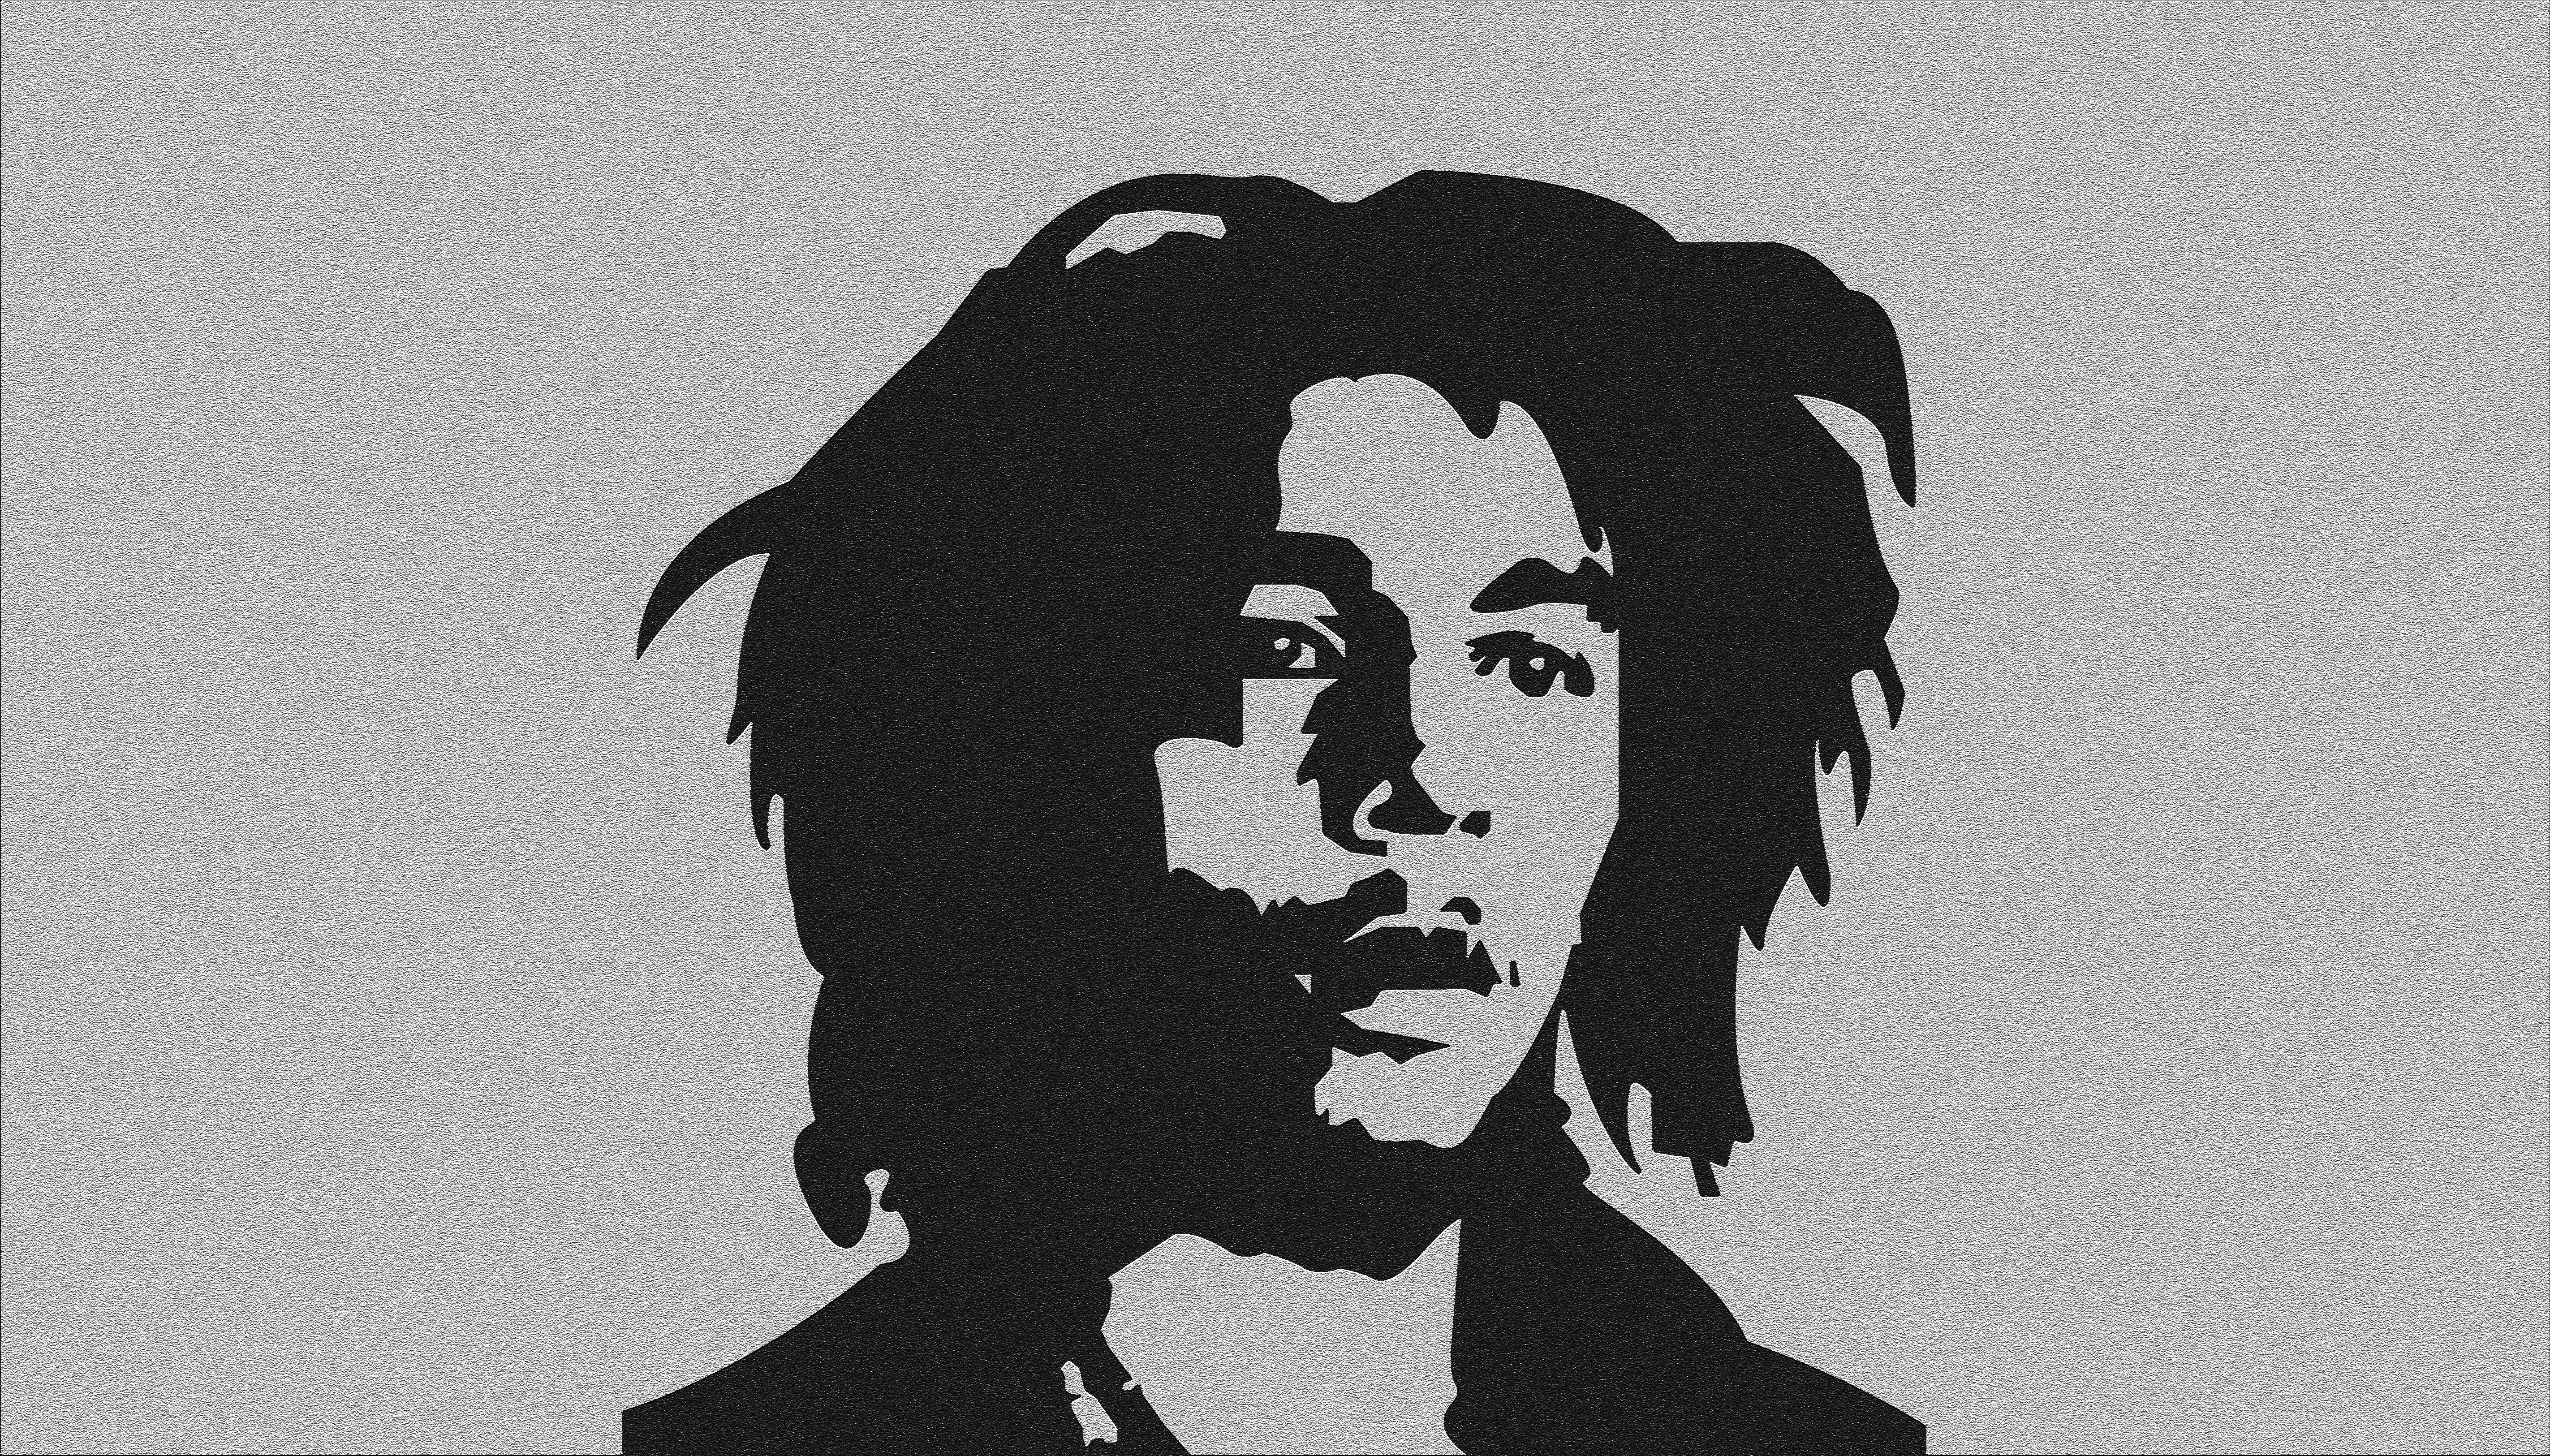 Bob Marley Portrait Wallpaper Simple Simple Bob Marley Based On One